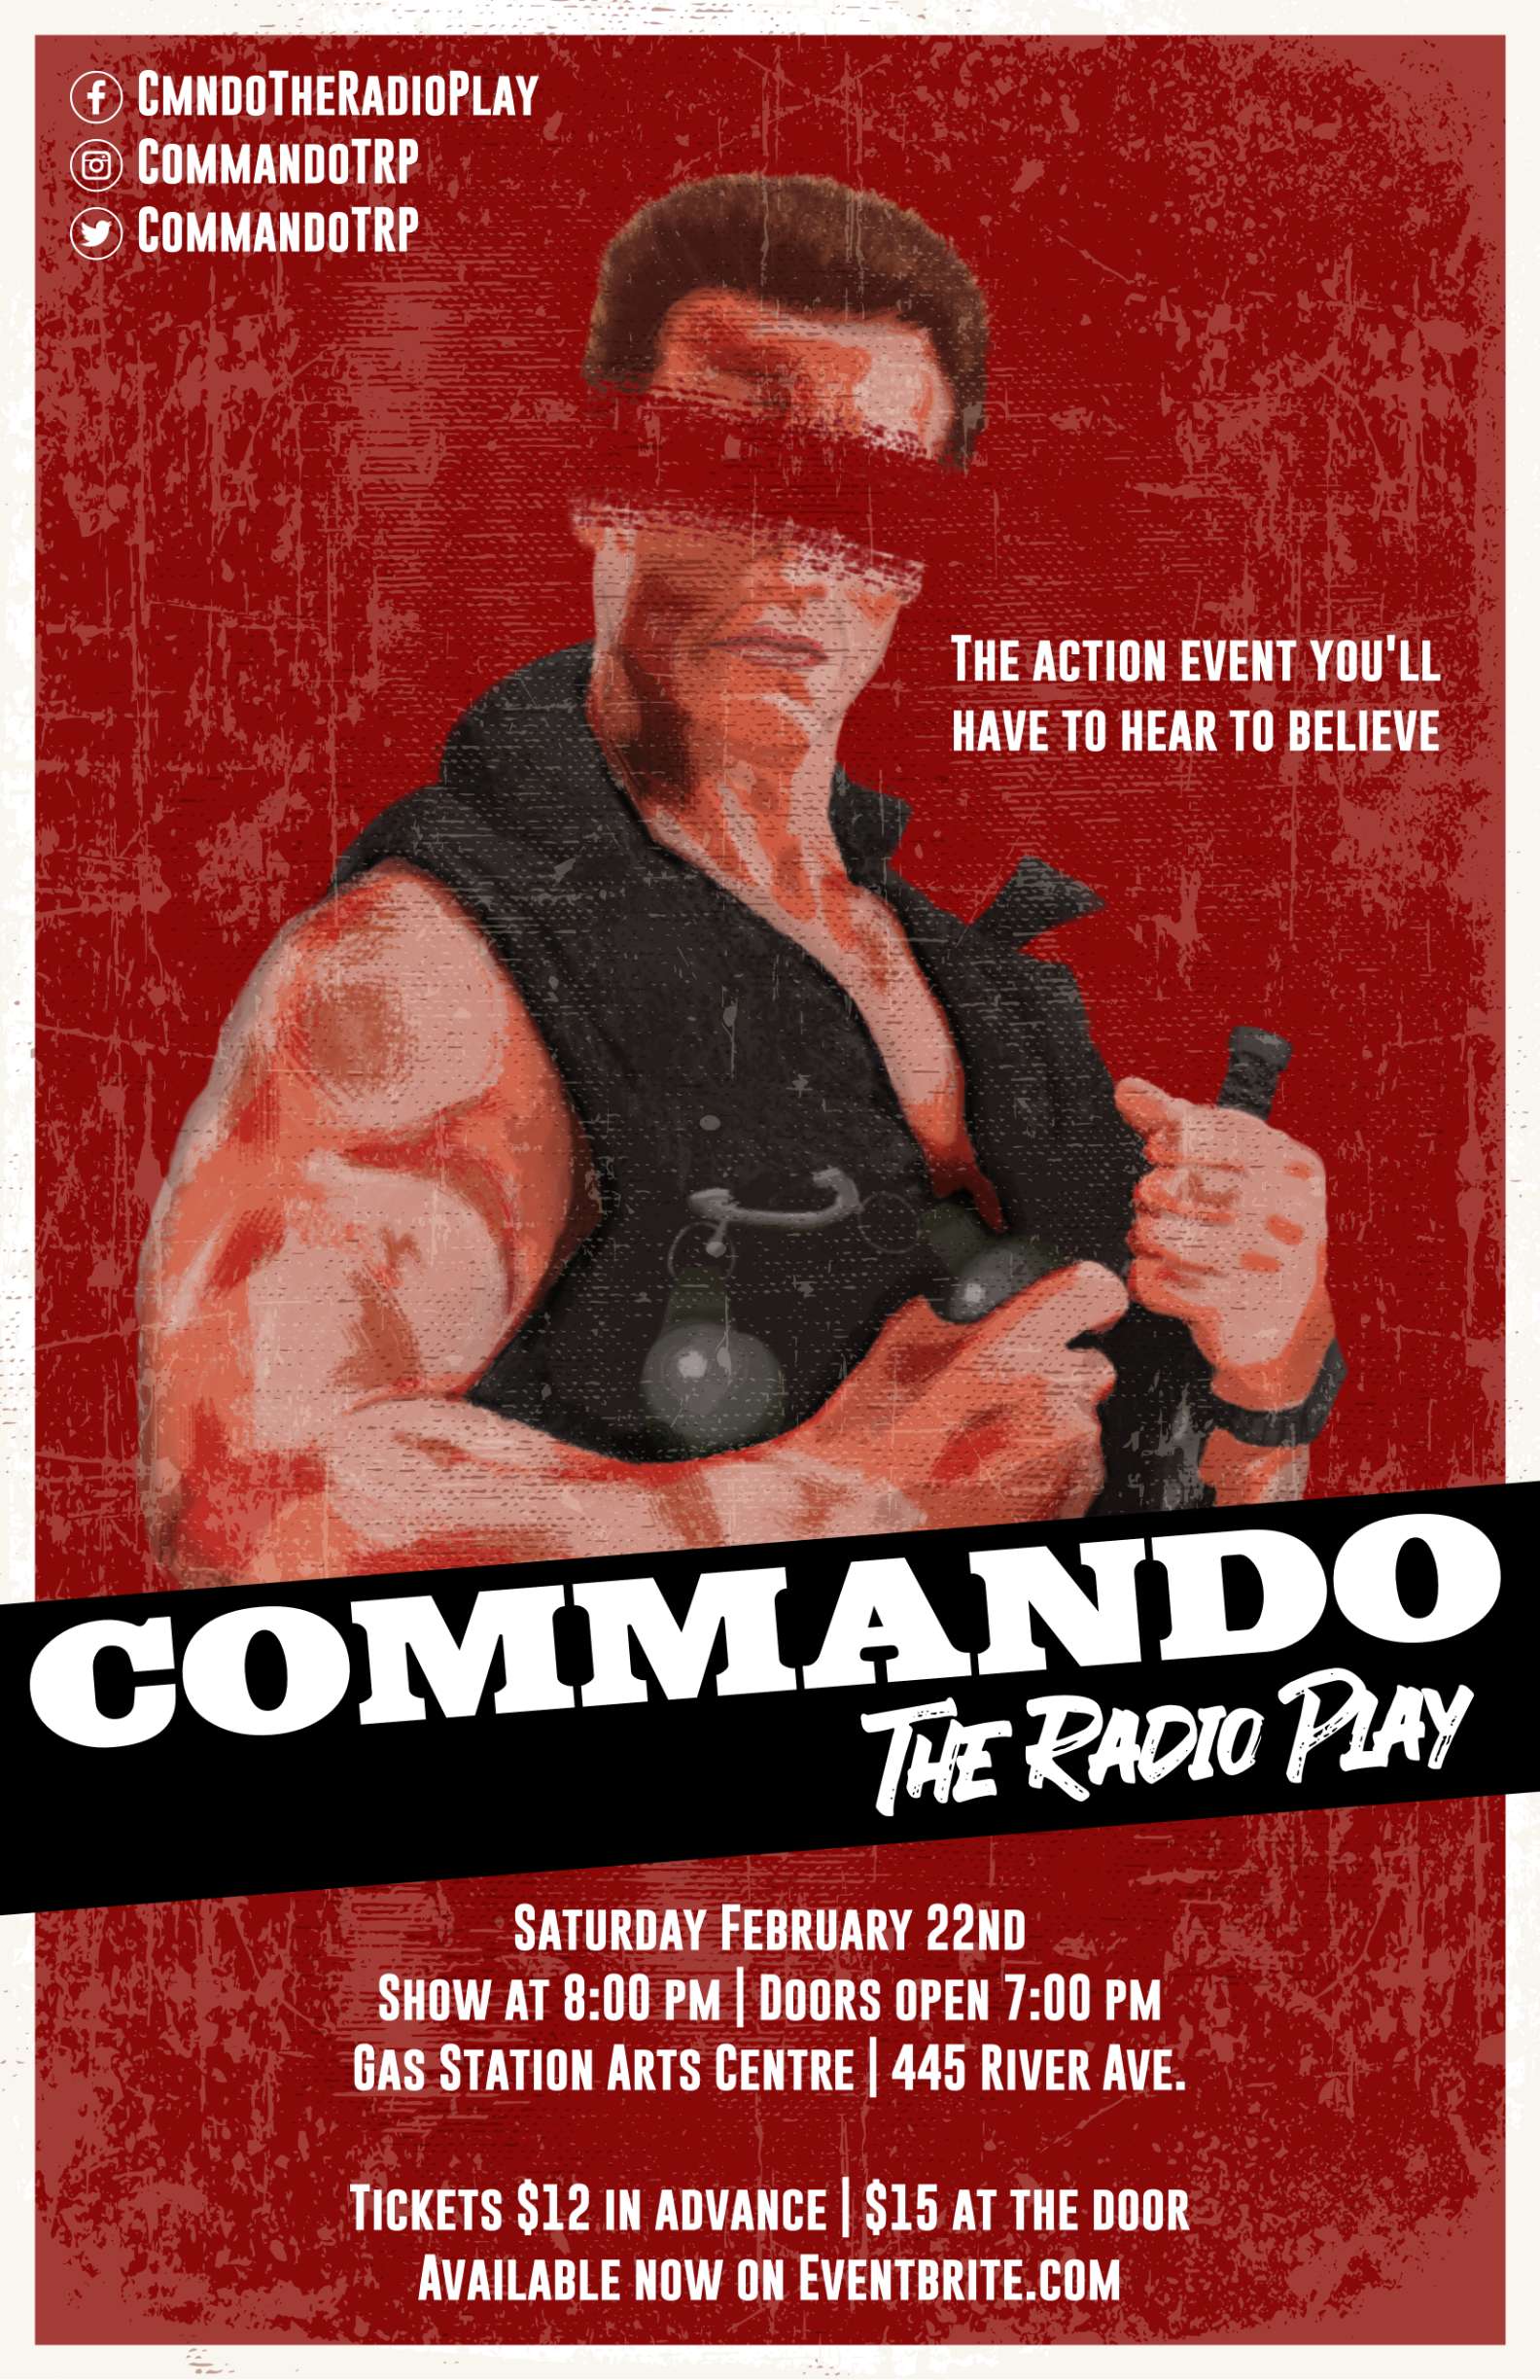 Commando - The Radio Play